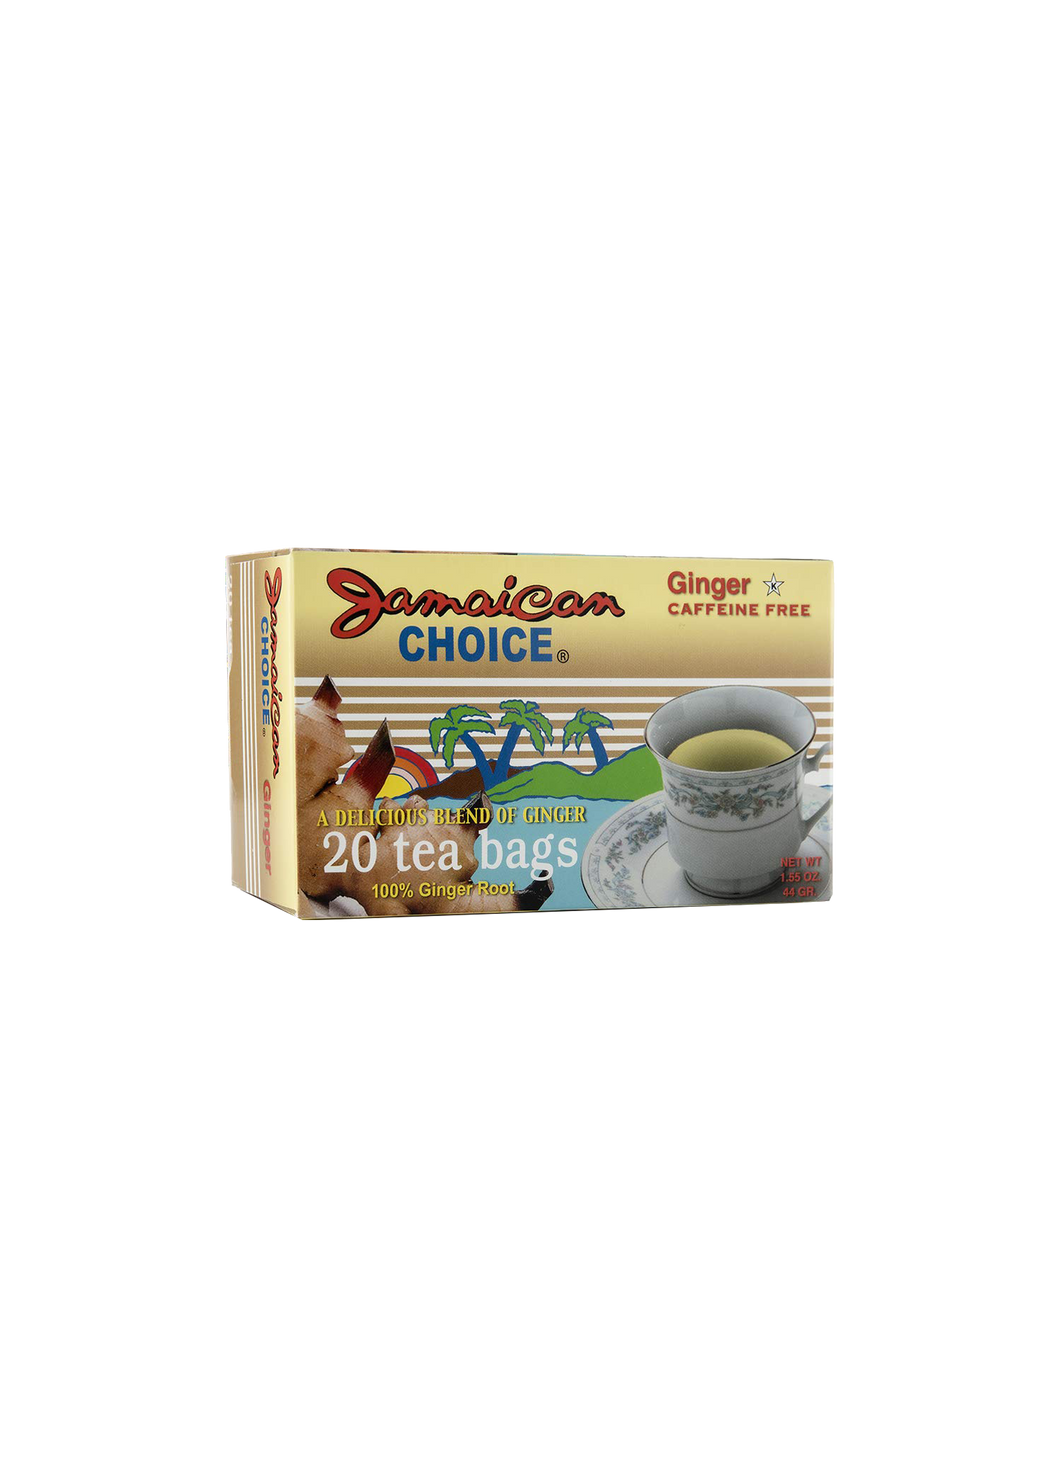 Jamaican Choice Ginger Caffeine Free 20 tea bags